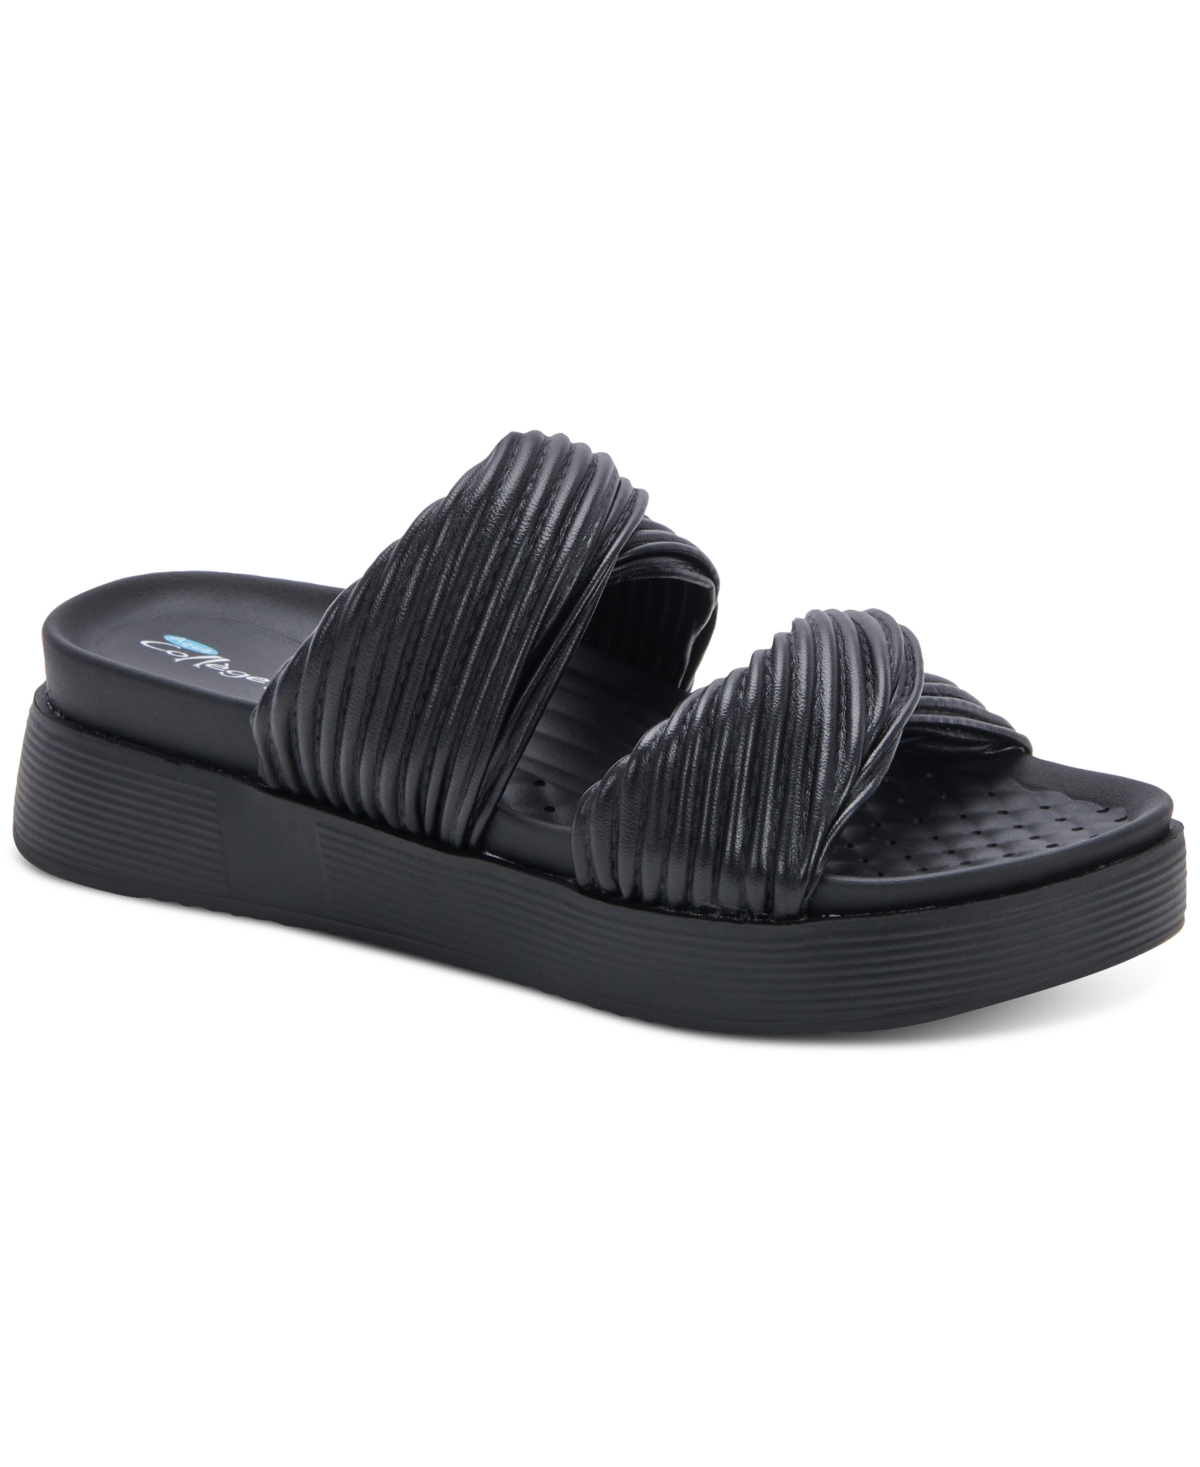 Aqua College Womens Sloan Leather Open Toe Casual Slide Sandals